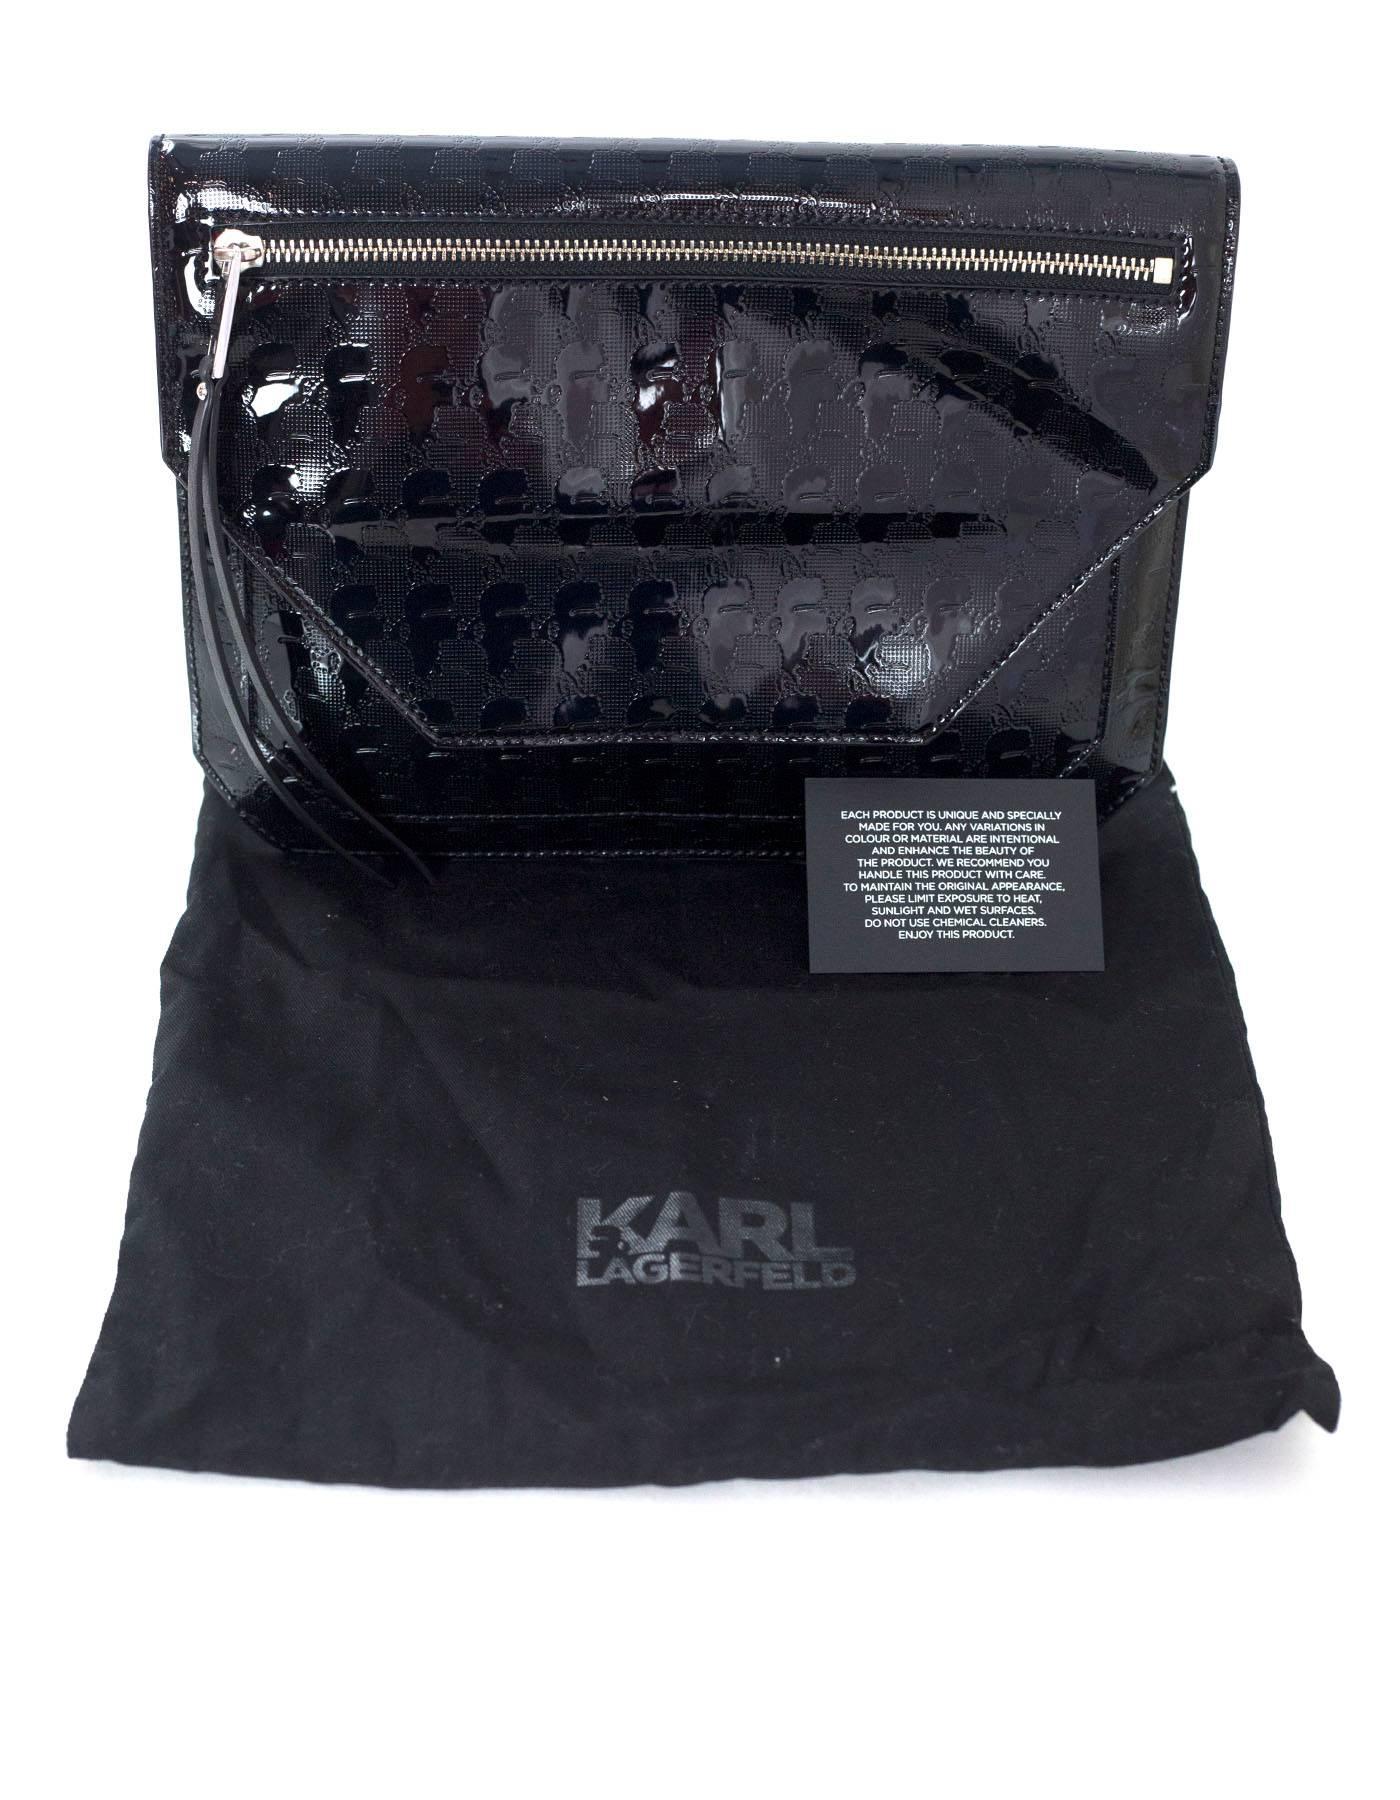 Karl Lagerfeld Black Patent Clutch Bag 6